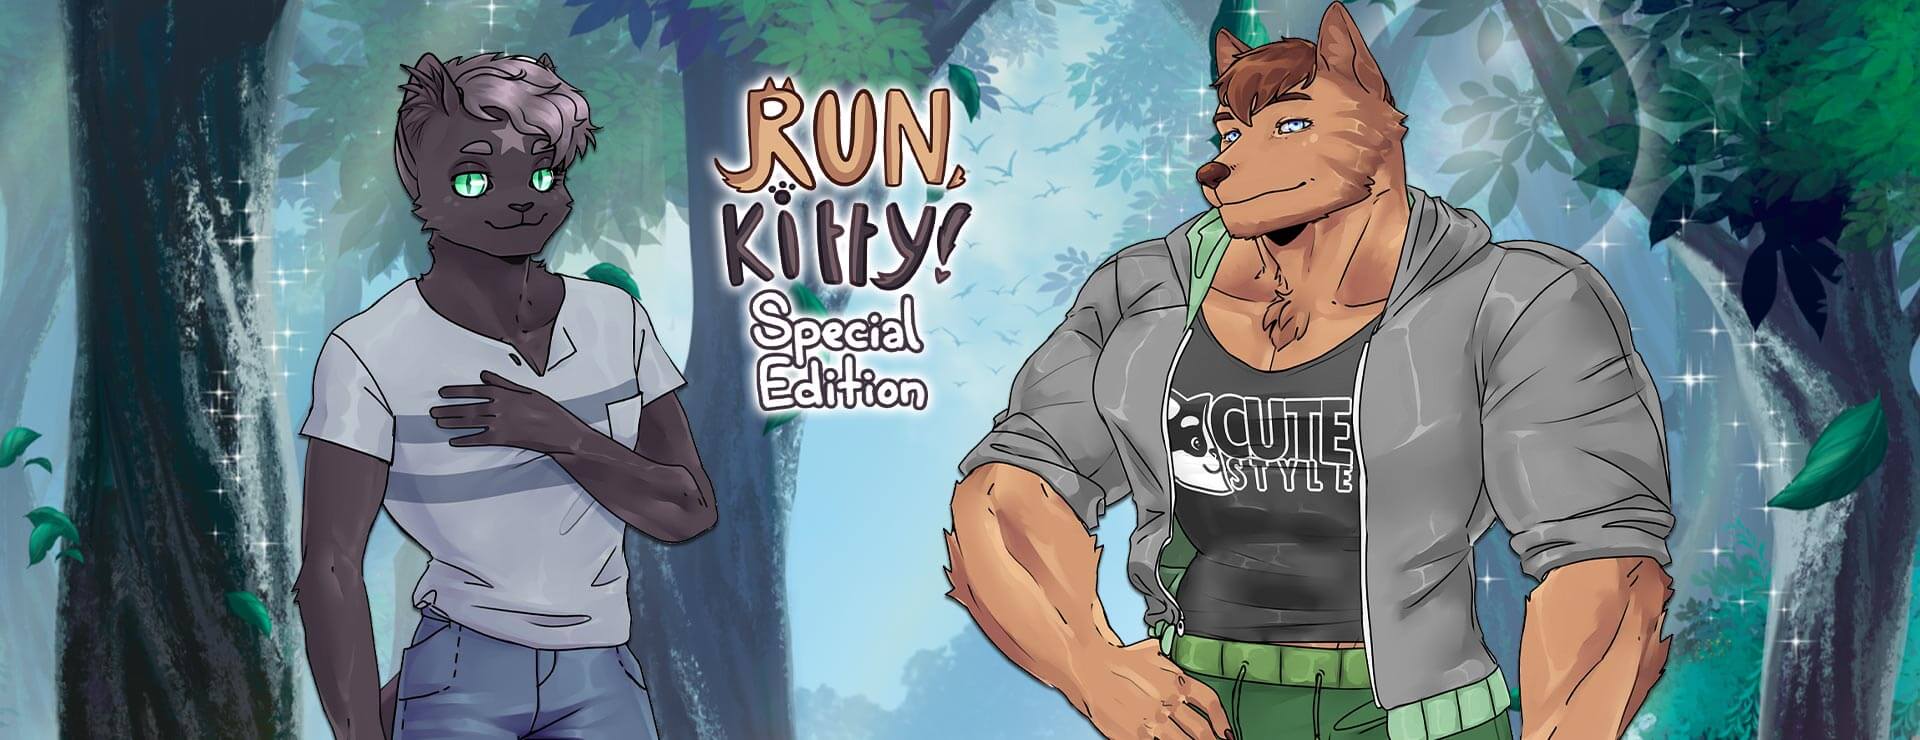 Run, Kitty! Special Edition - Novela Visual Juego